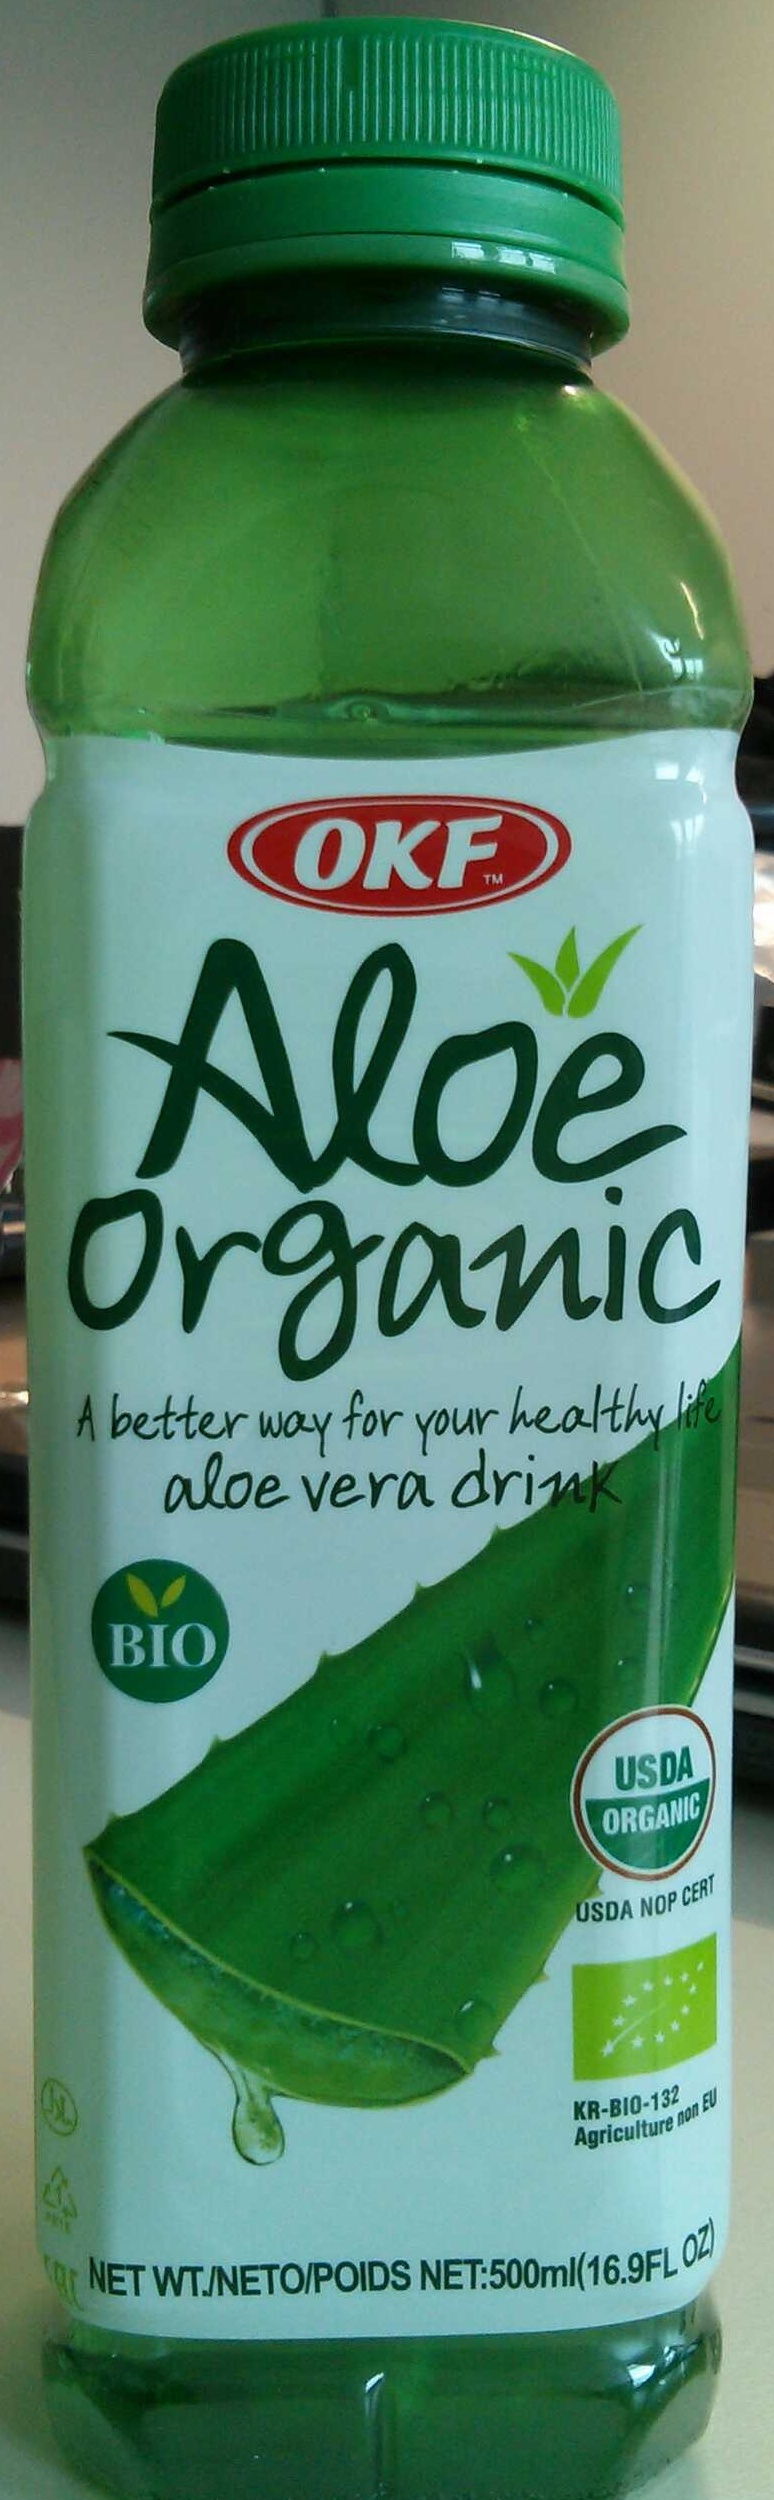 Aloe Organic - Product - fr